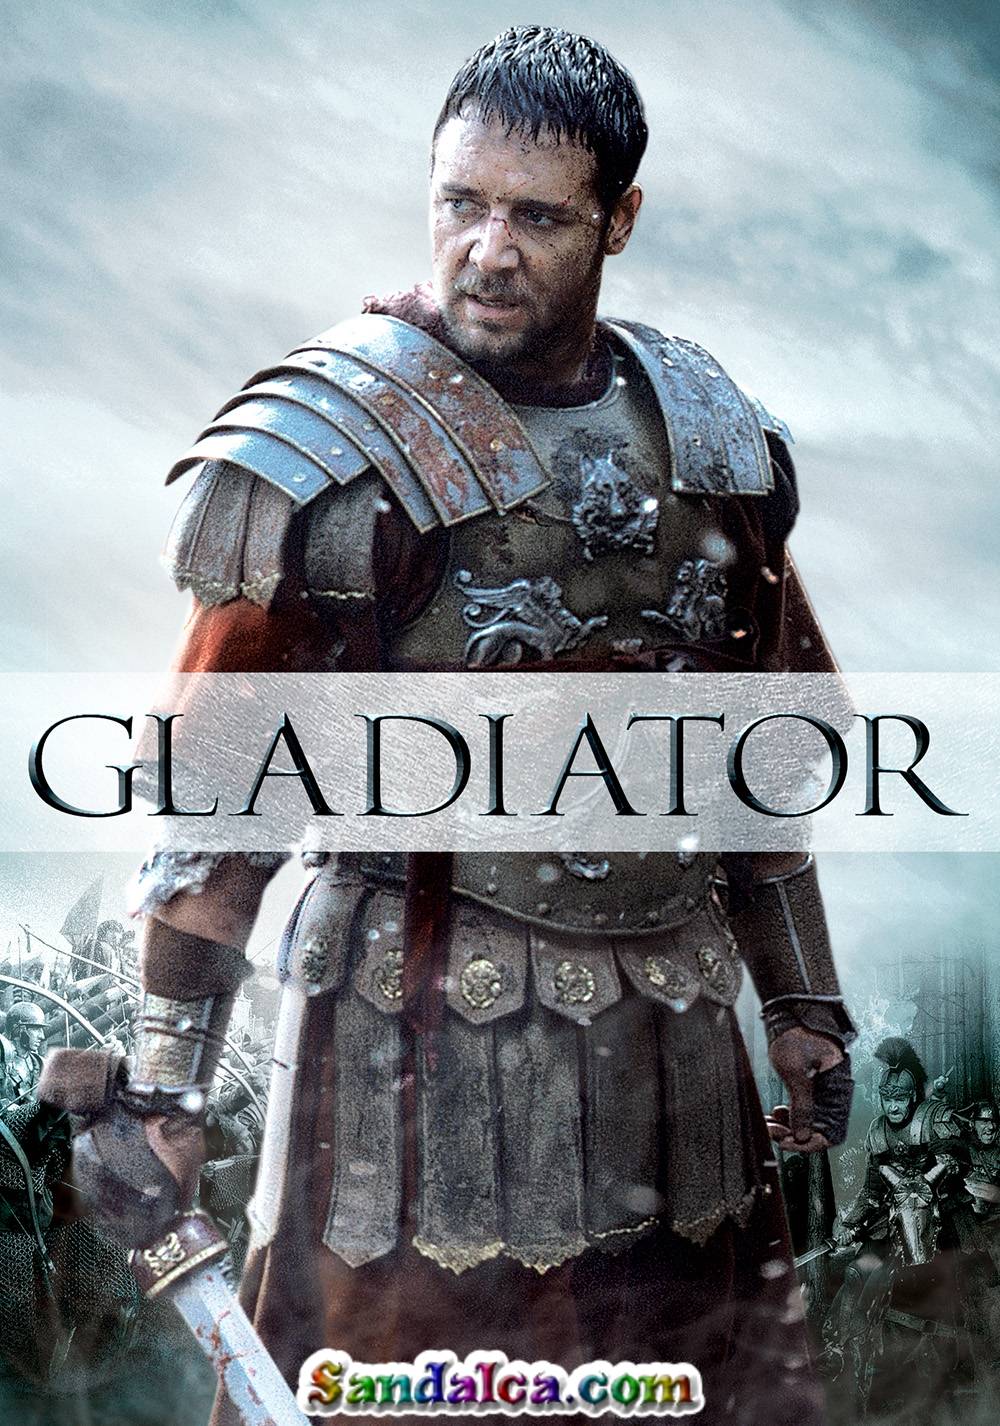 Gladyatör - Gladiator Türkçe Dublaj indir | Remastered Edition Extended Cut | 1080p DUAL | 2000